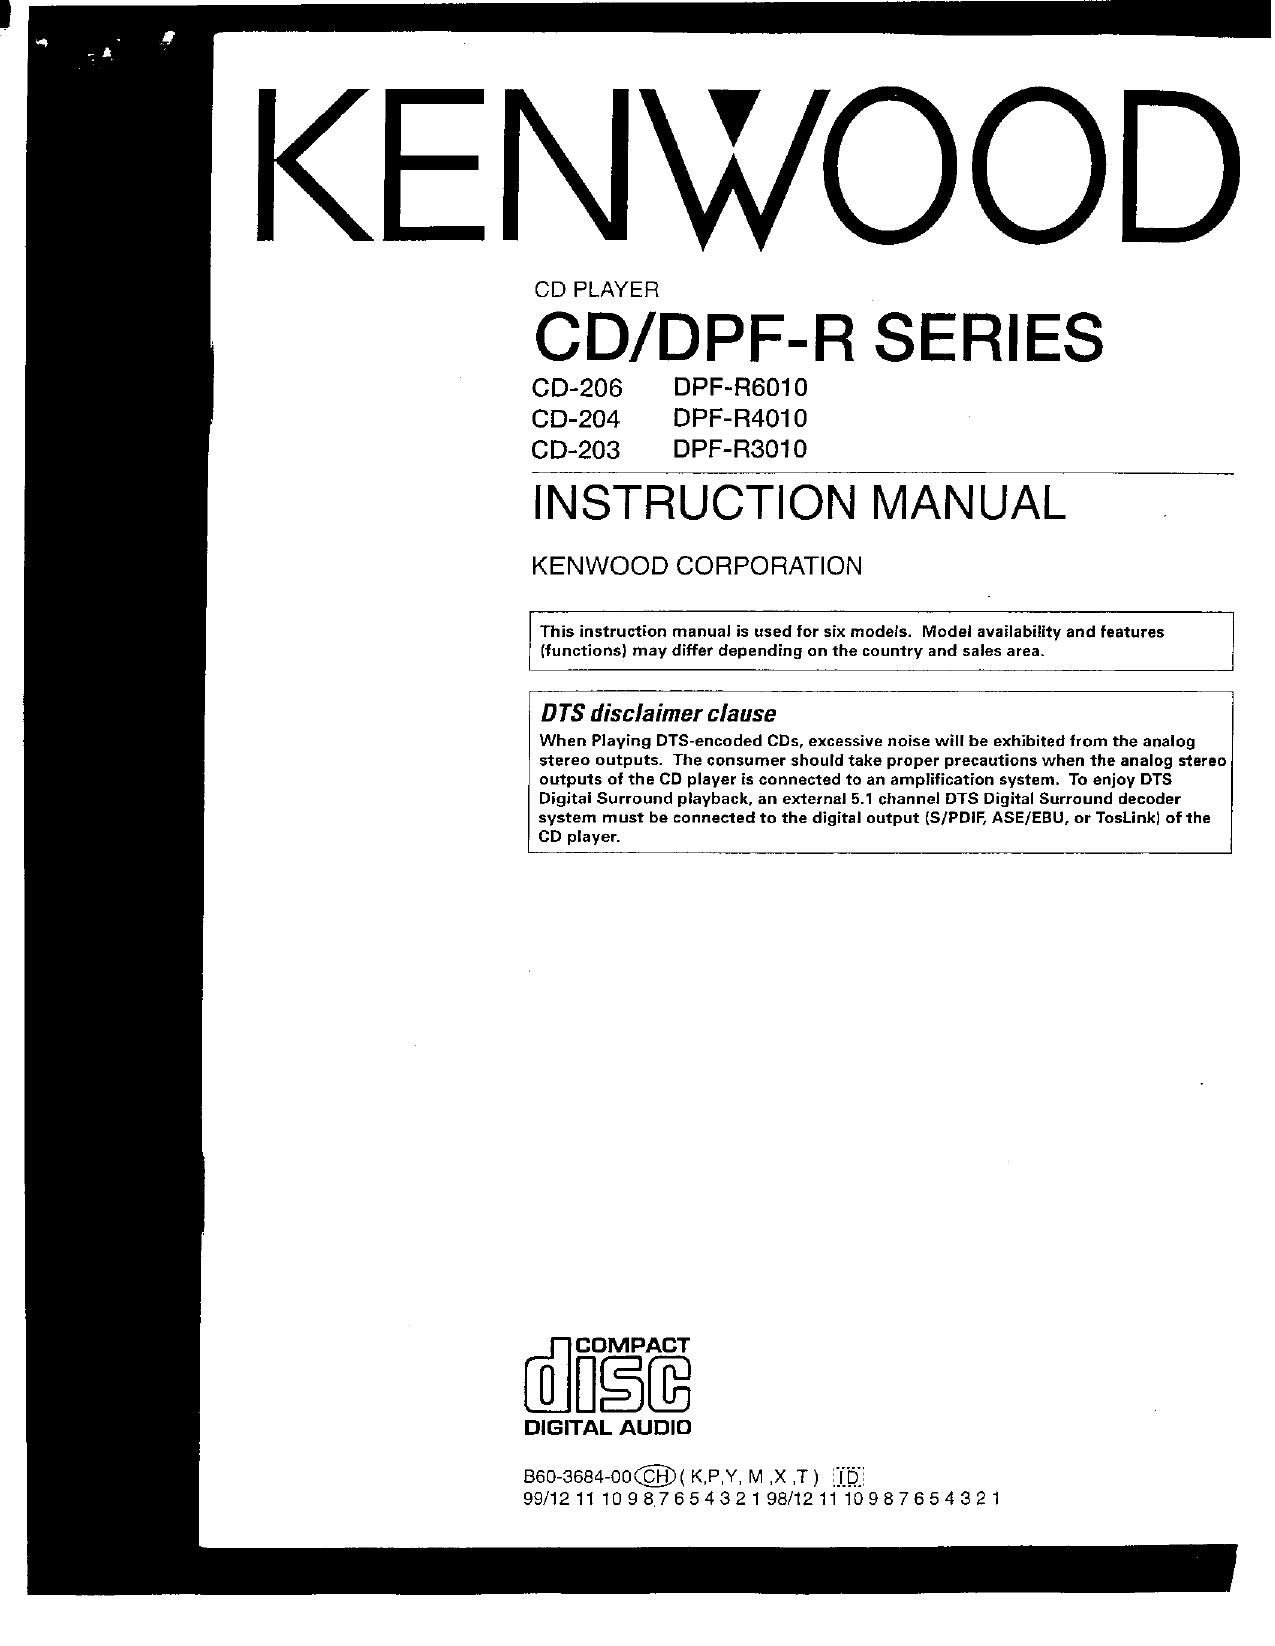 Kenwood CD 203 Owners Manual